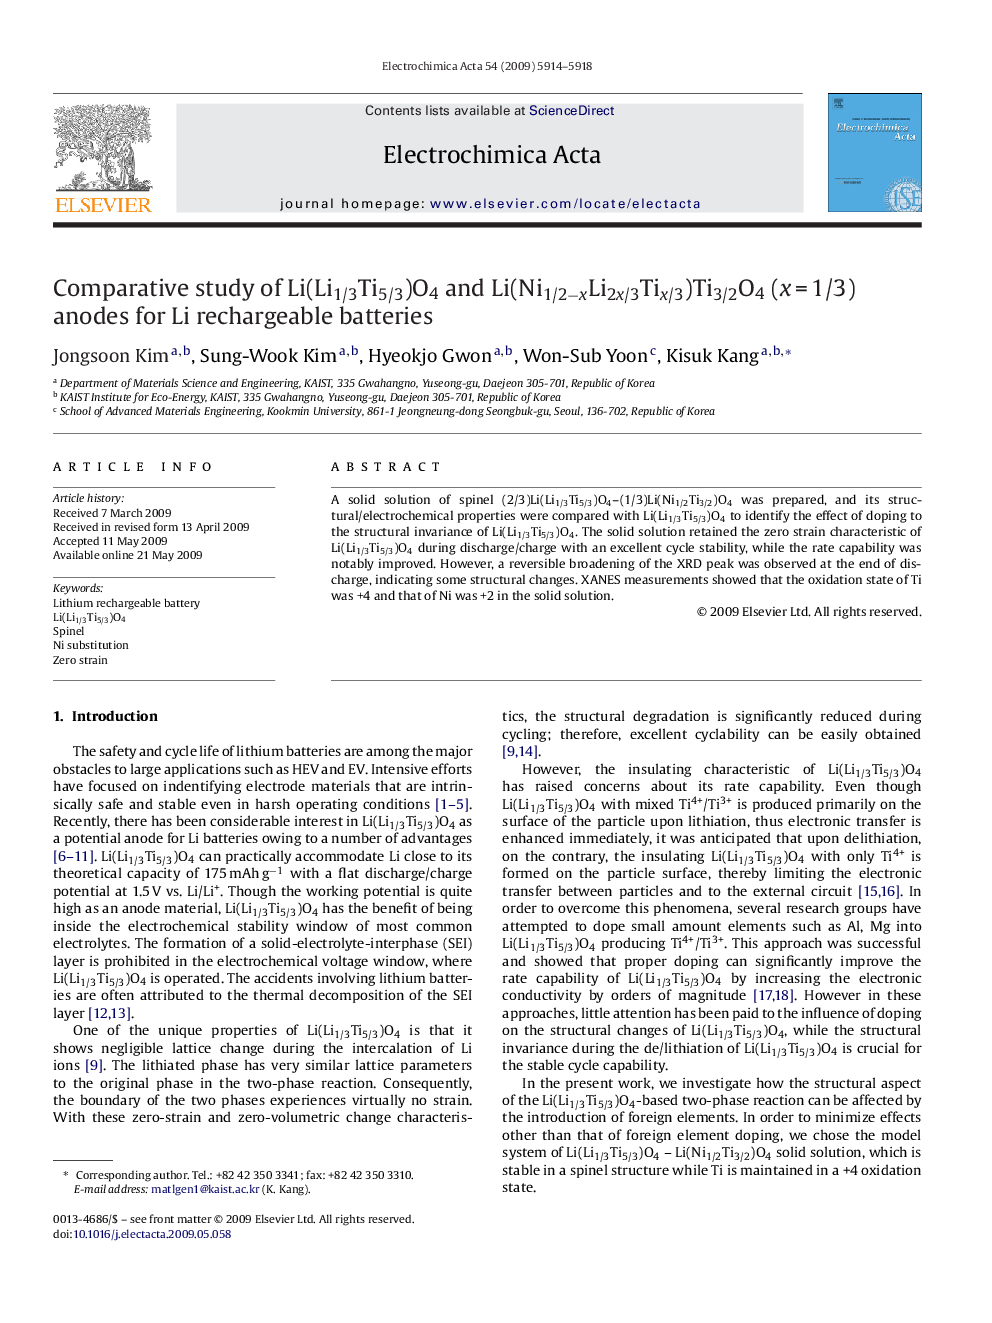 Comparative study of Li(Li1/3Ti5/3)O4 and Li(Ni1/2−xLi2x/3Tix/3)Ti3/2O4 (x = 1/3) anodes for Li rechargeable batteries